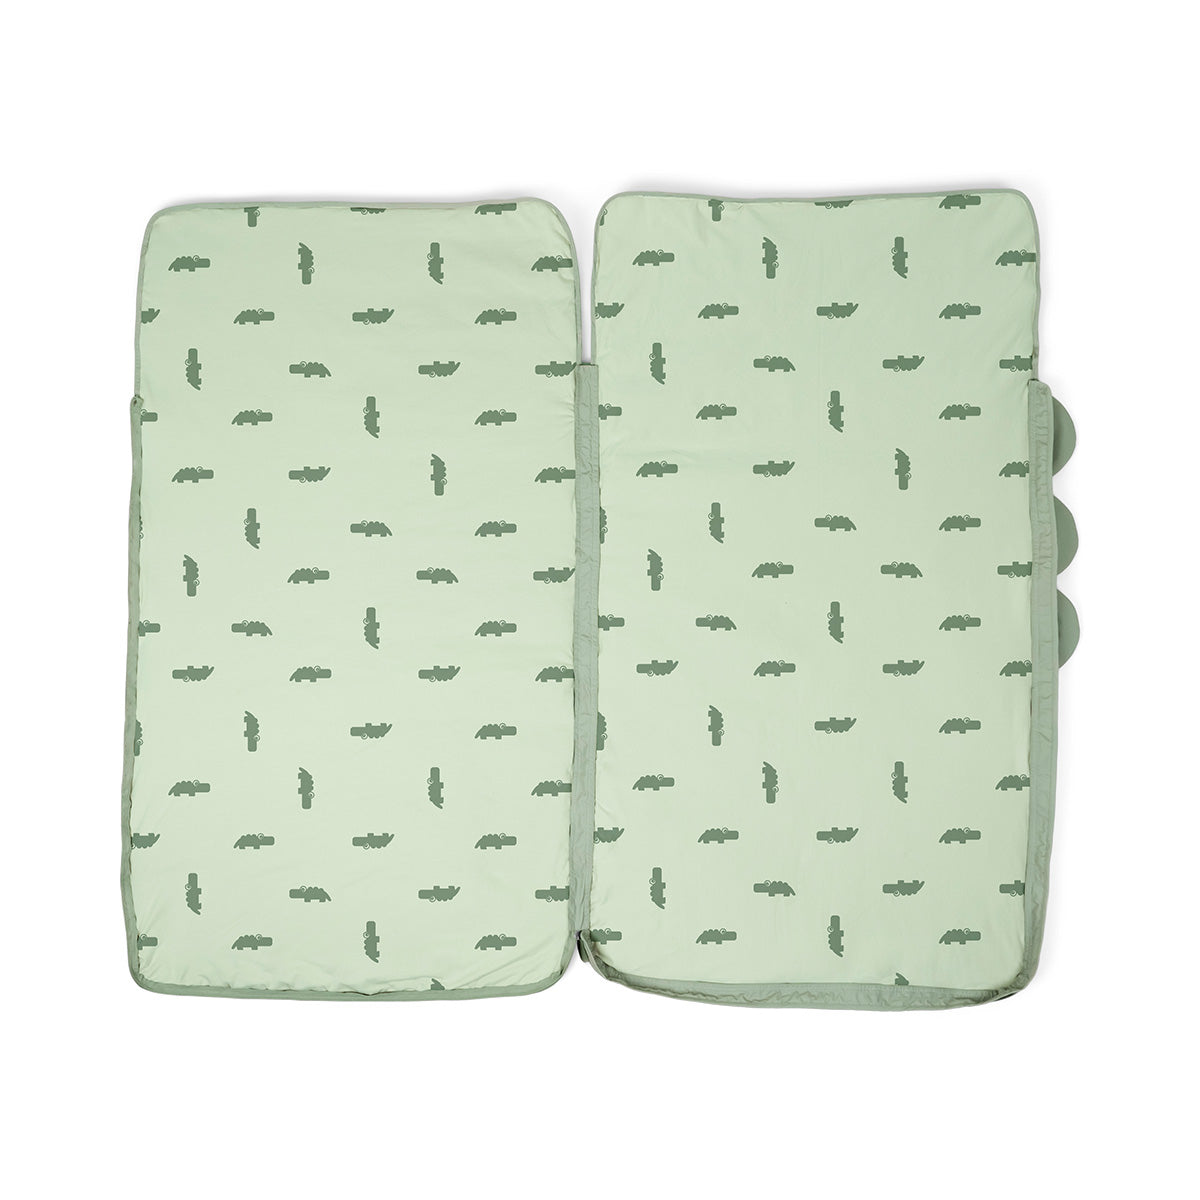 Quilted kids slumber bag - Croco - Green